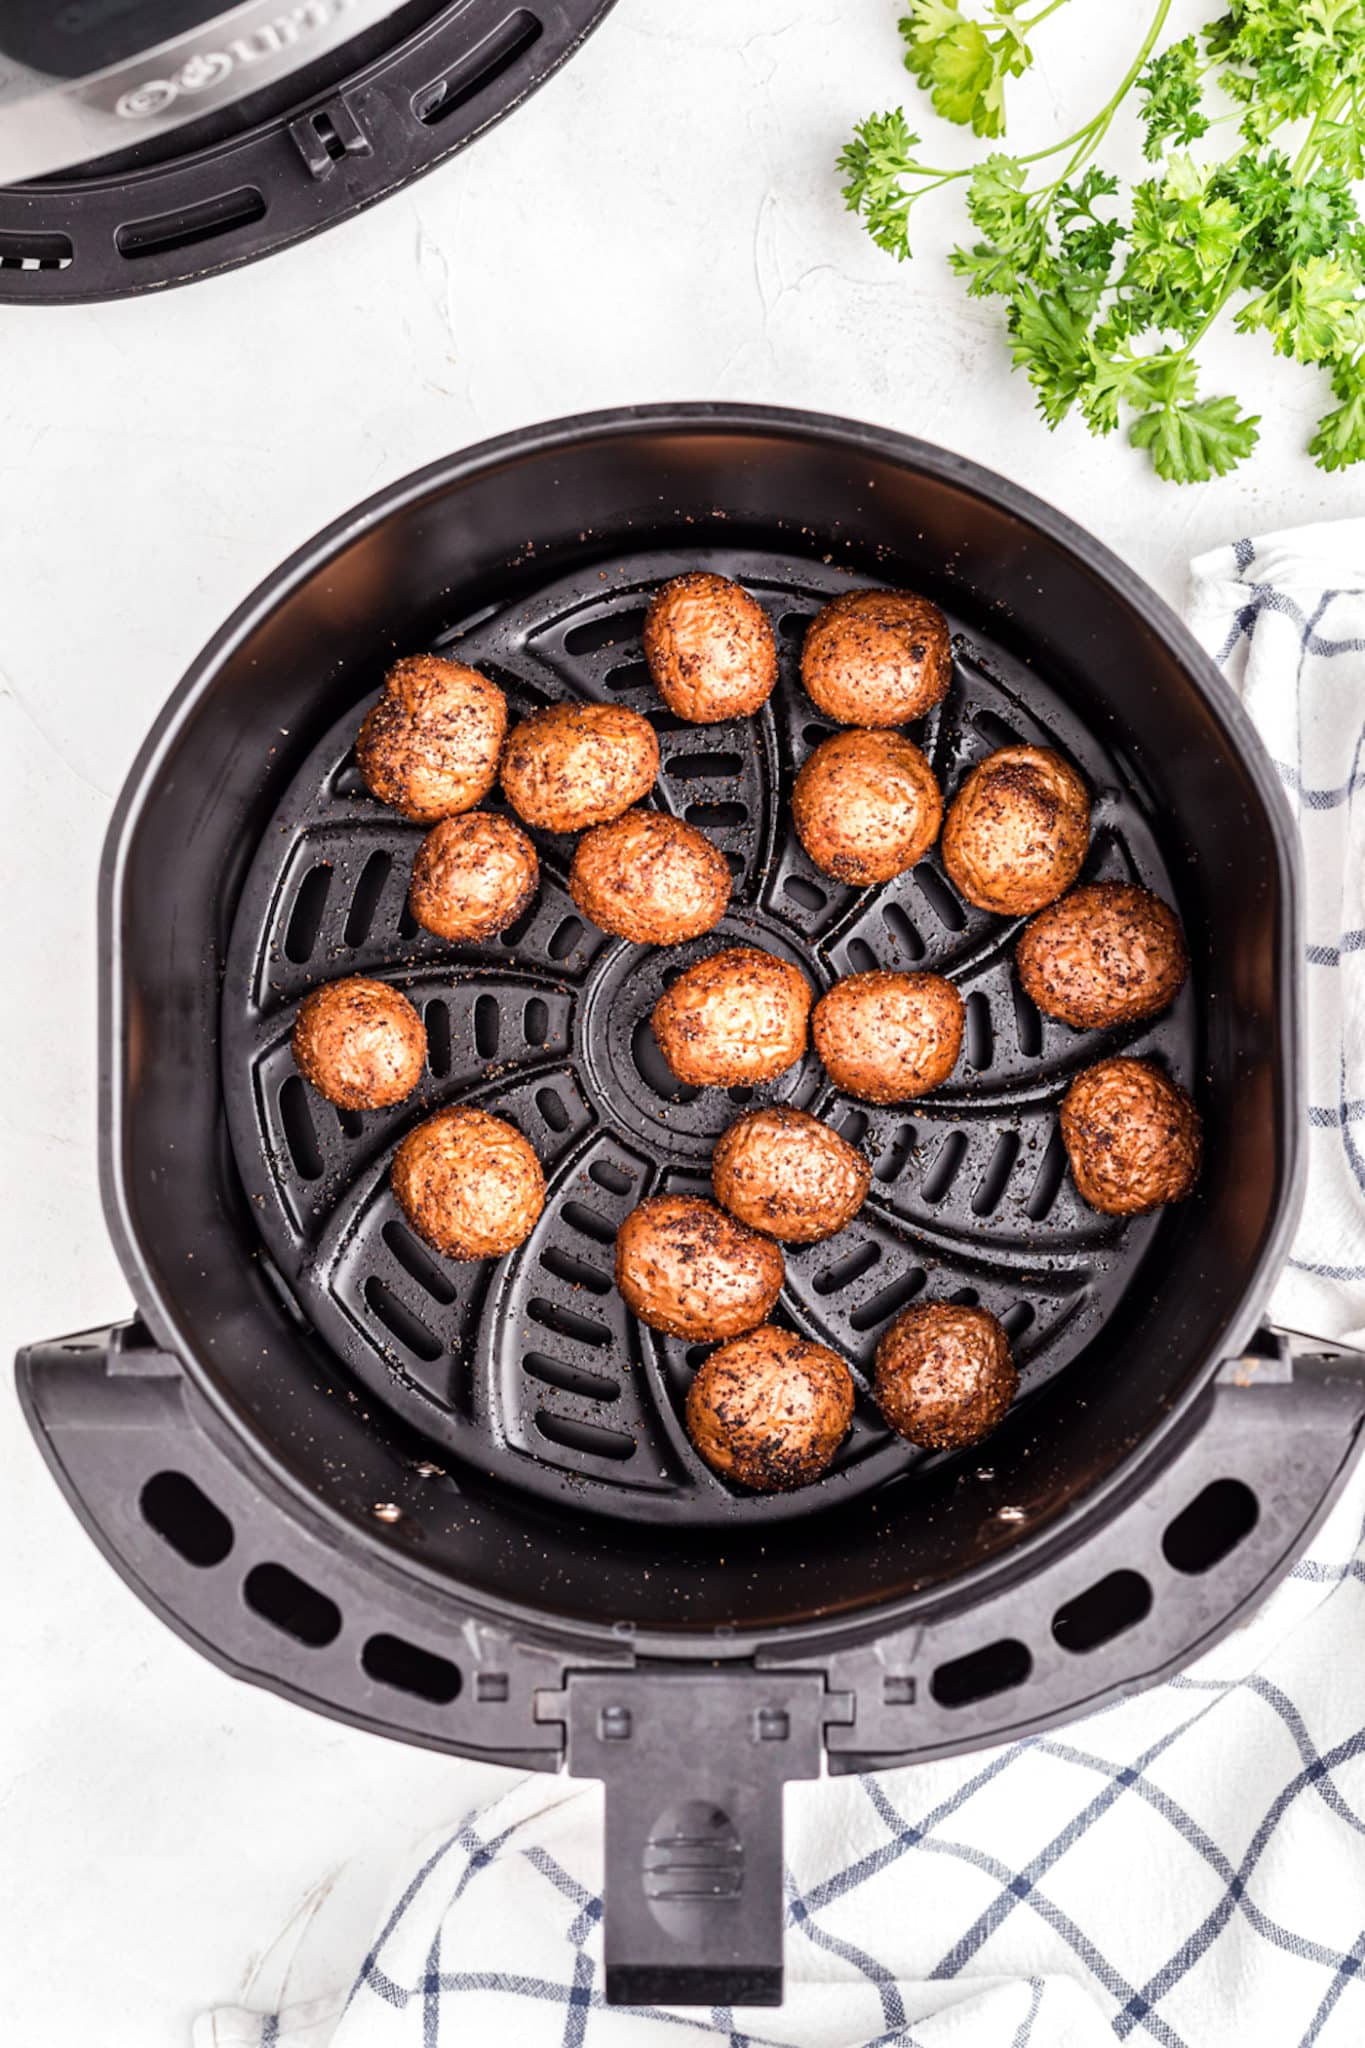 roasted potatoes in air fryer.